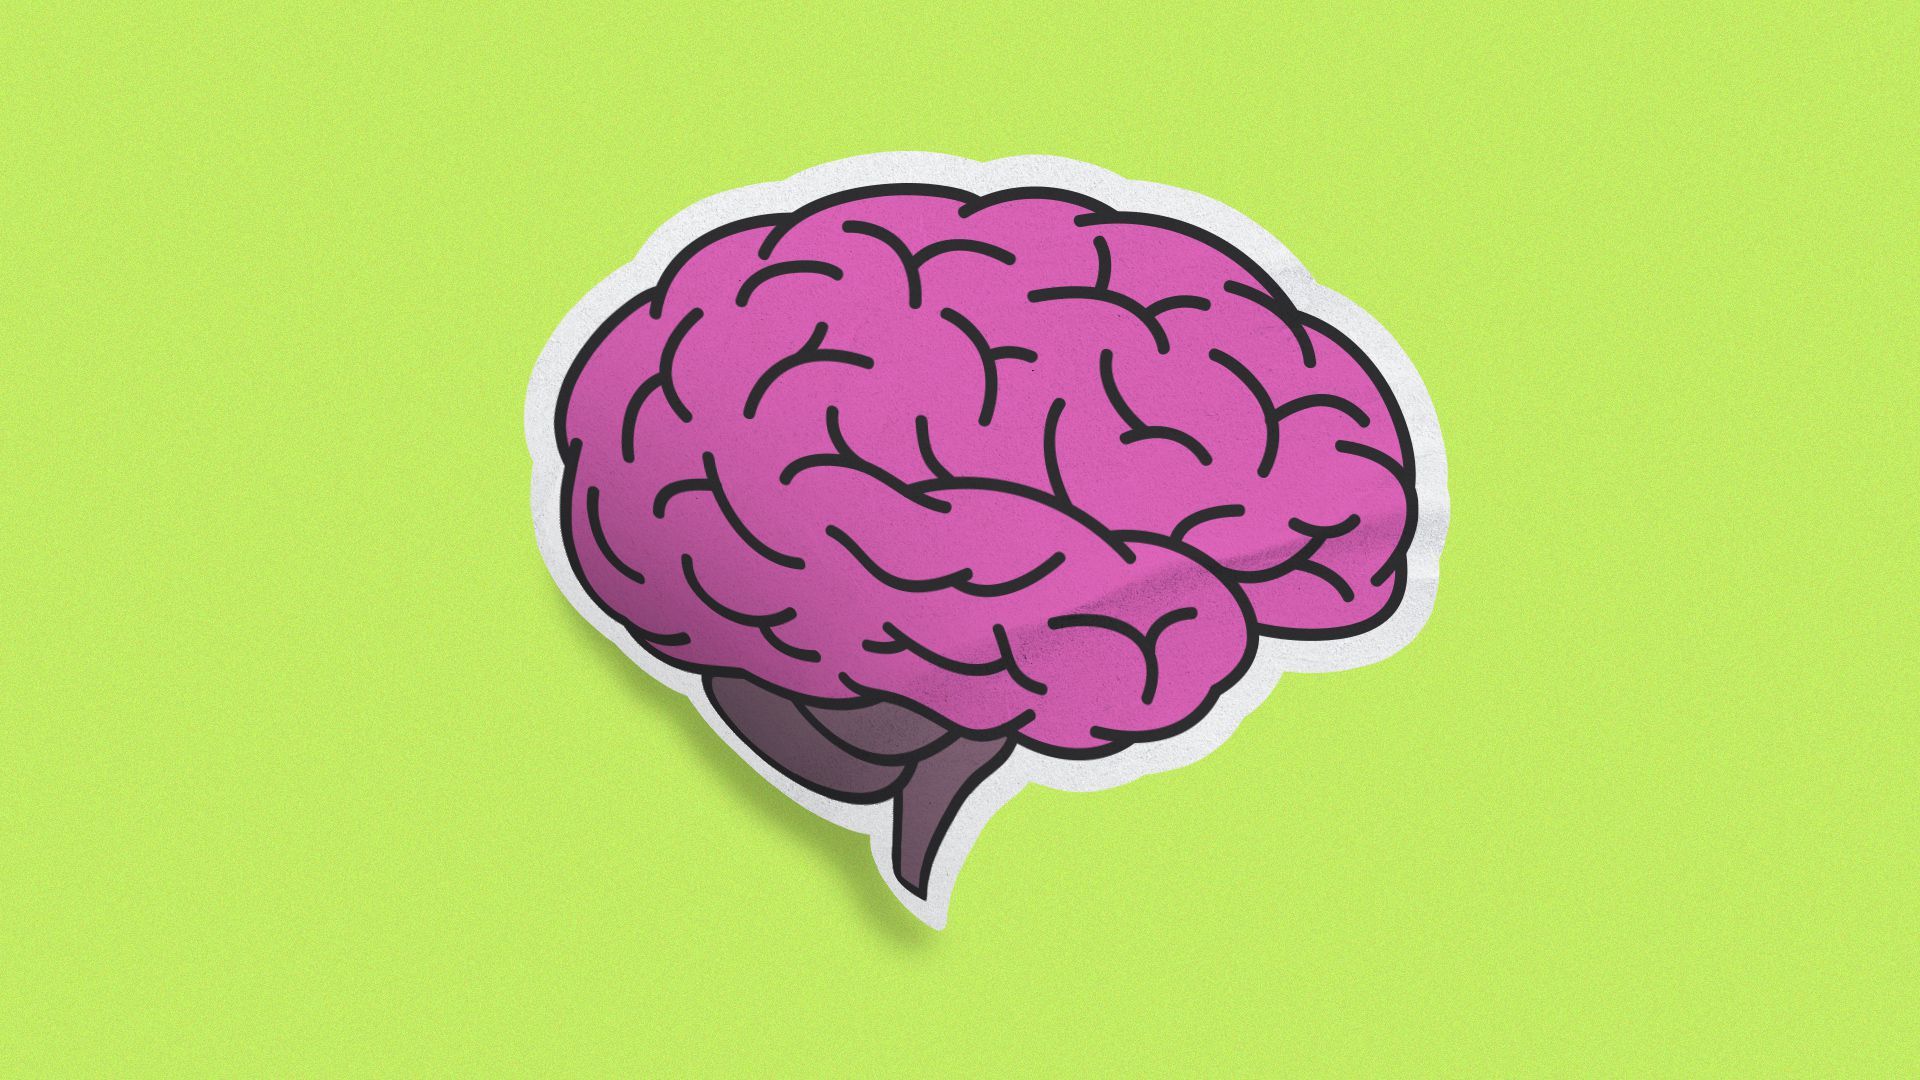 Illustration of a brain-shaped sticker on a vivid background.